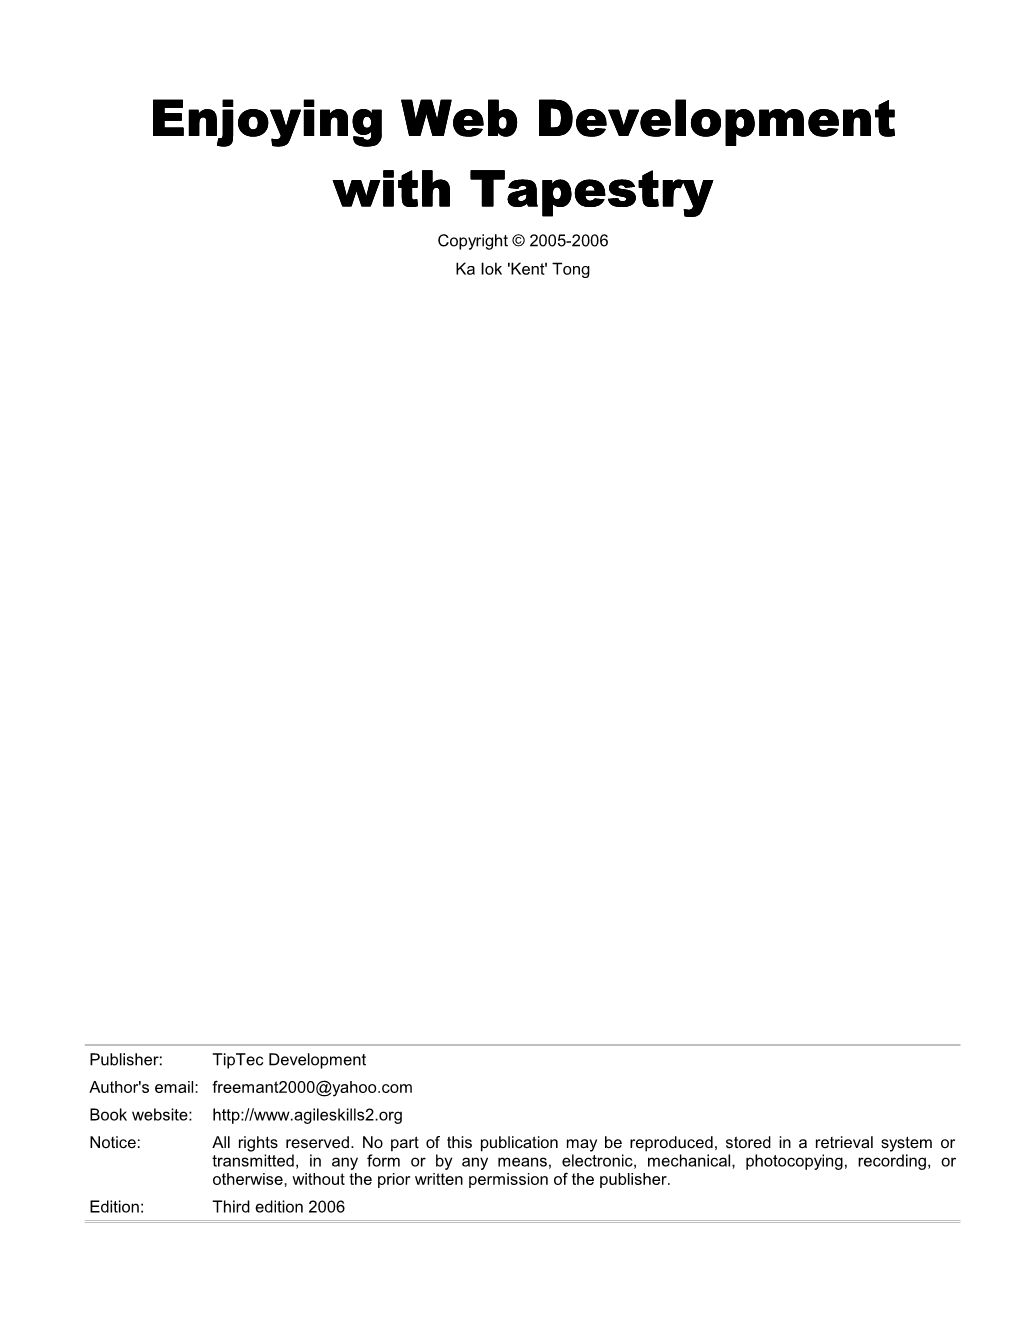 Enjoying Web Development with Tapestry Copyright © 2005-2006 Ka Iok 'Kent' Tong